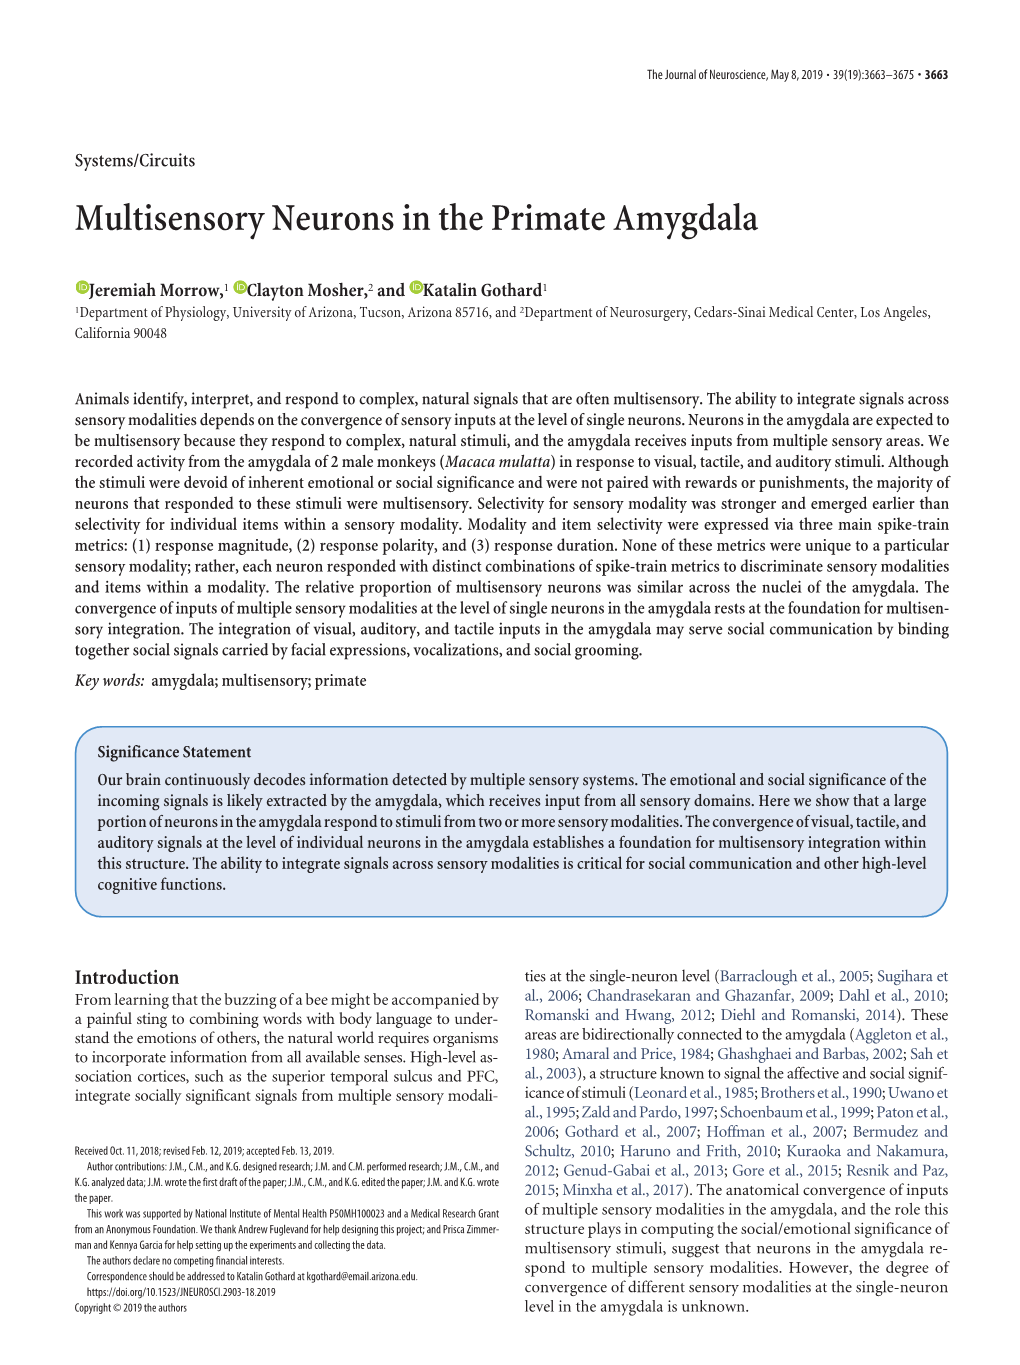 Multisensory Neurons in the Primate Amygdala